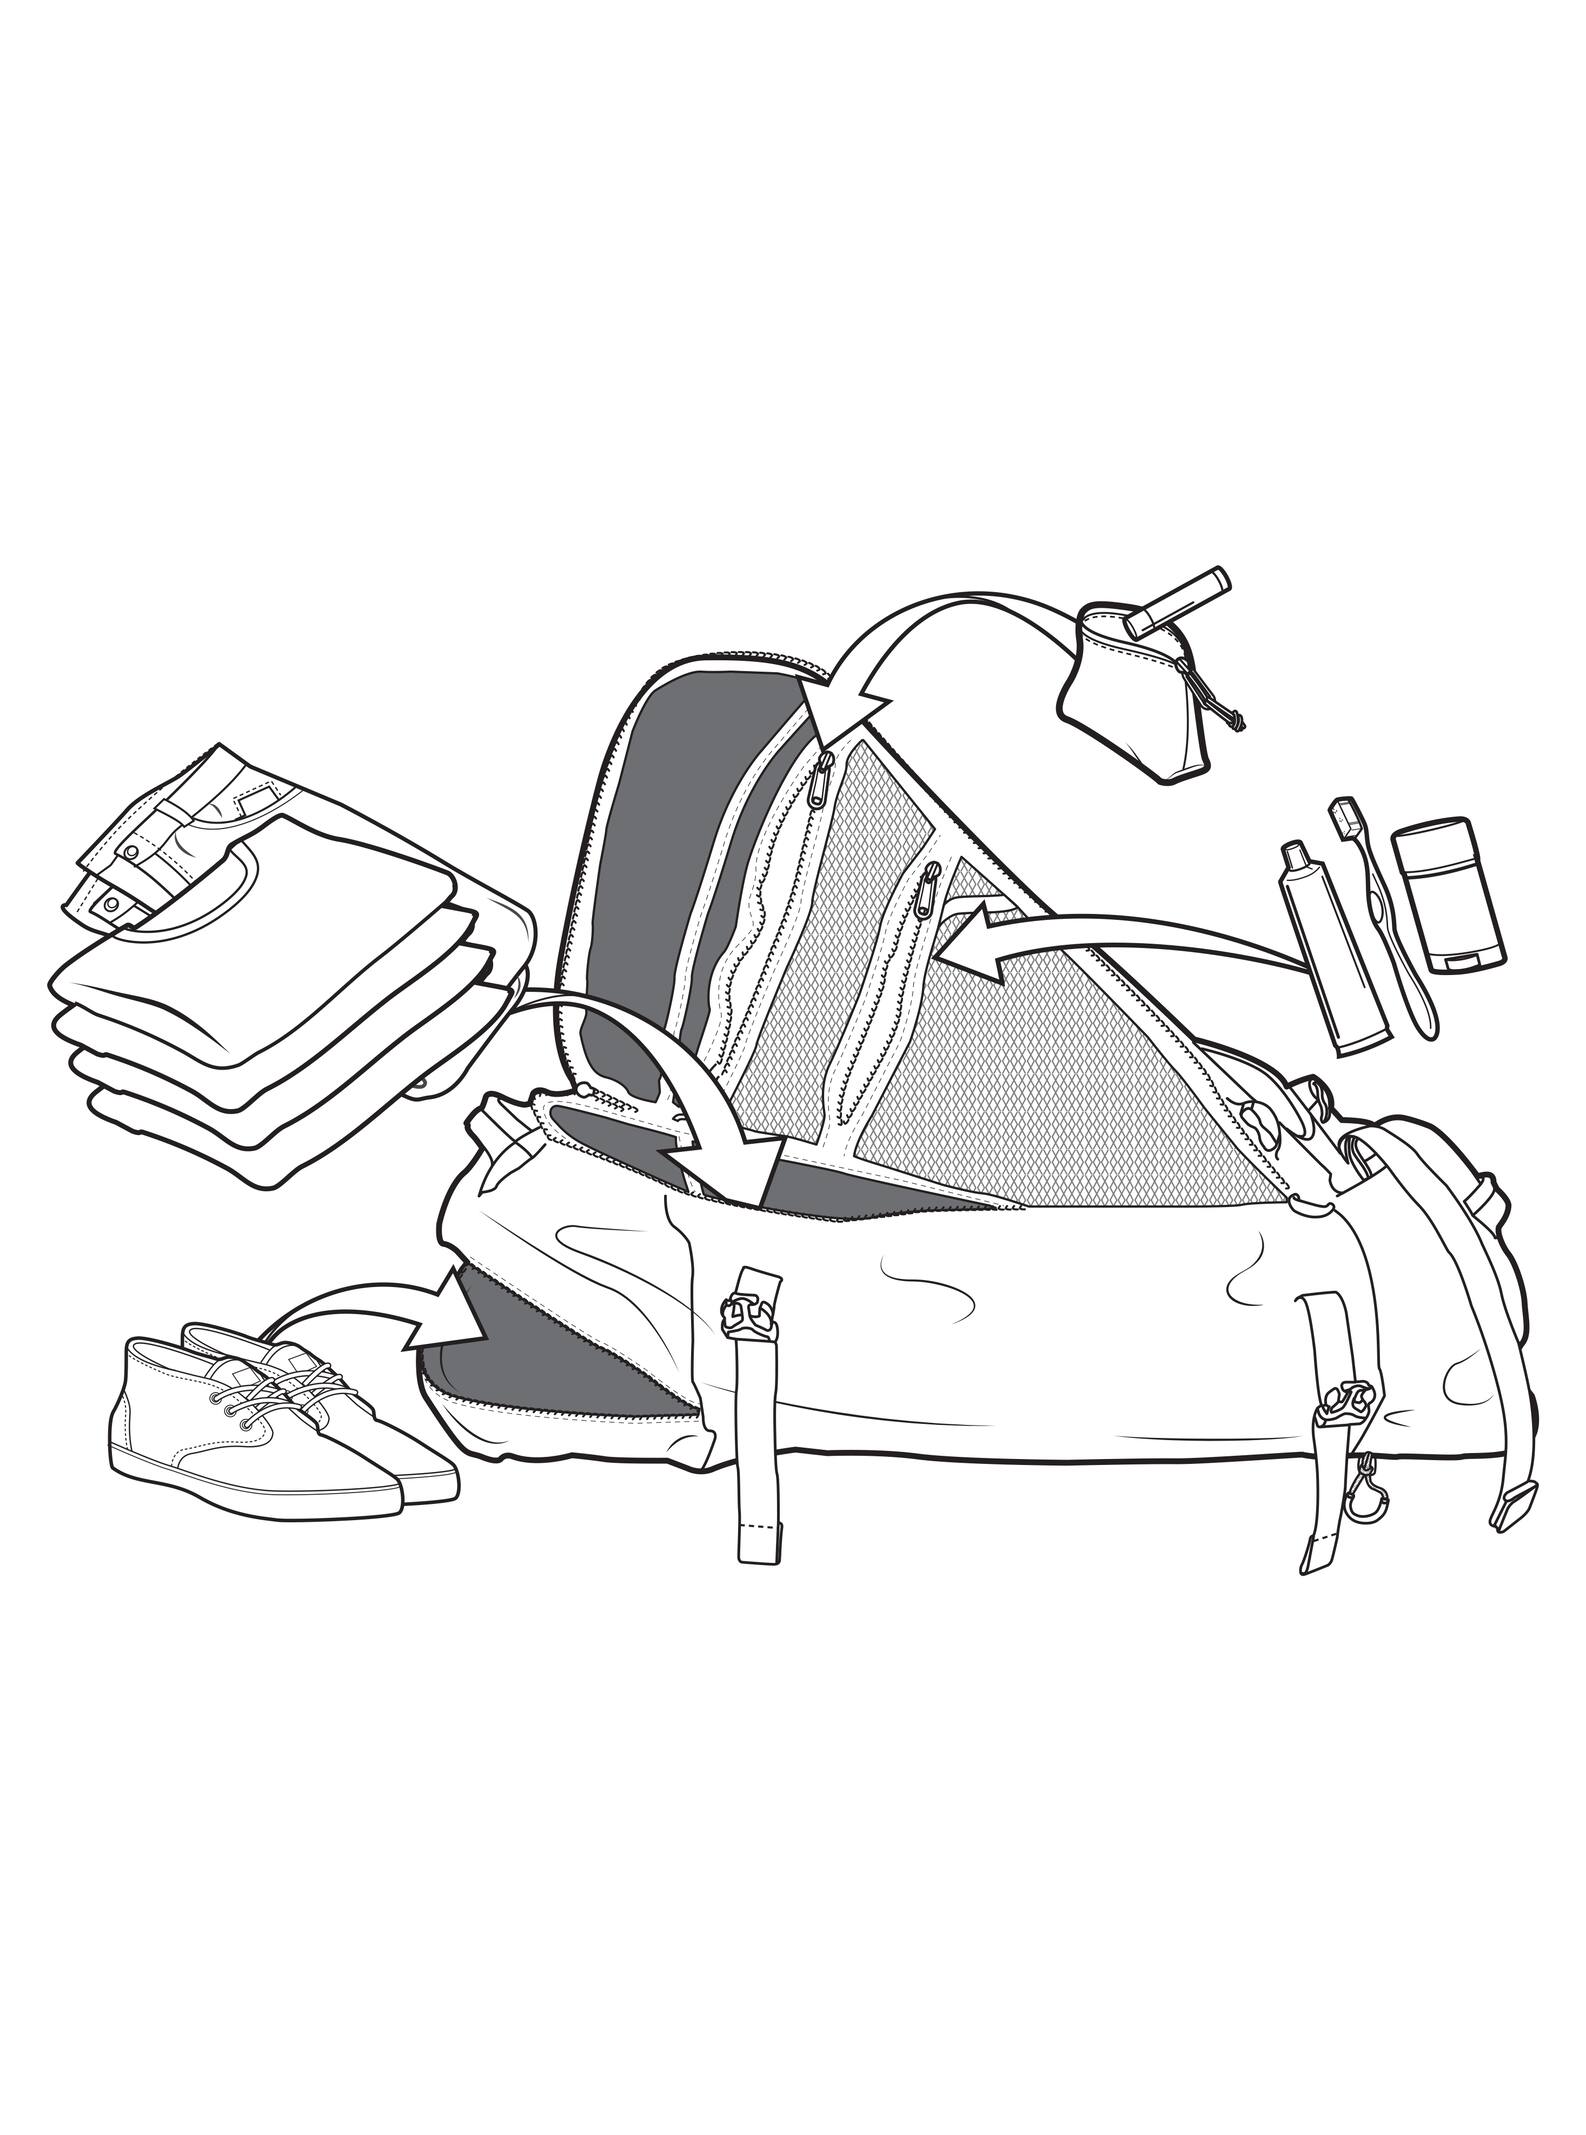 Burton Multipath 90L Large Duffel Bag | Luggage & Packs | Burton